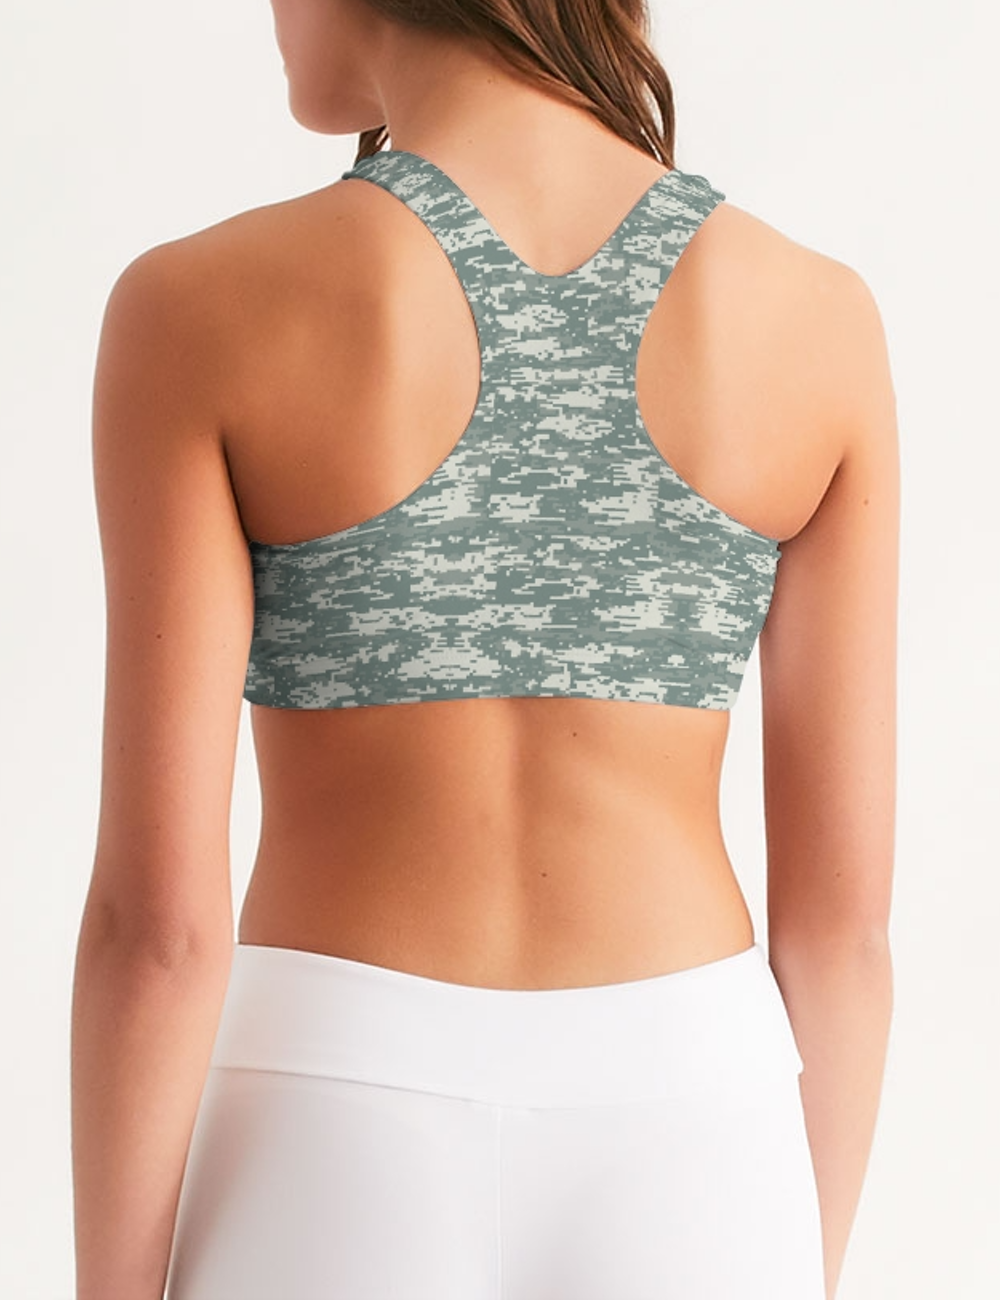 Digital Military Camouflage Print | Women's Standard Sports Bra OniTakai